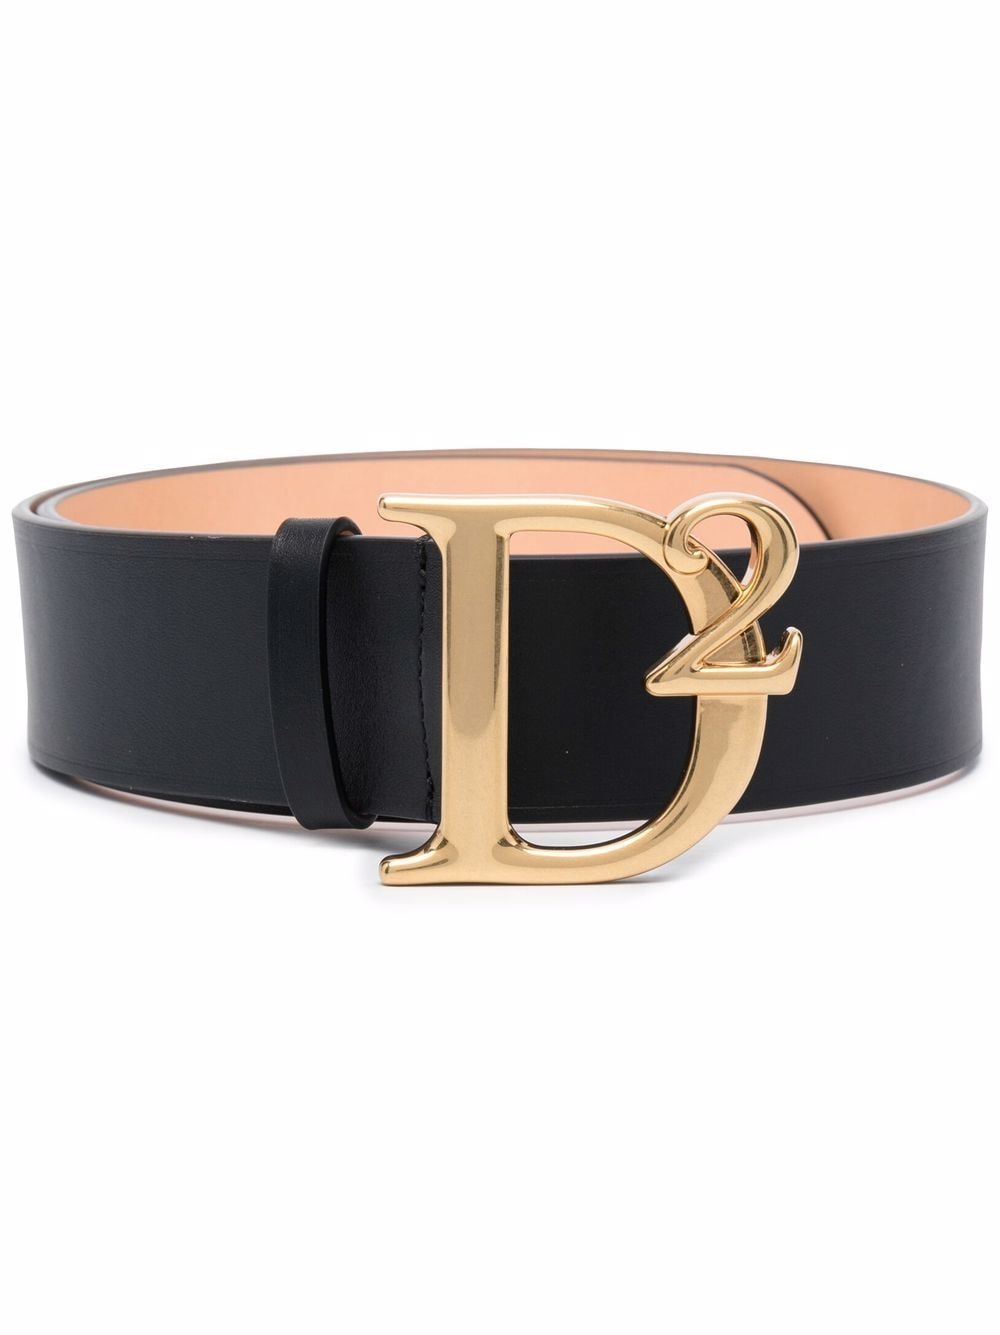 DSQUARED2 WOMEN D2 leather belt Black/Gold